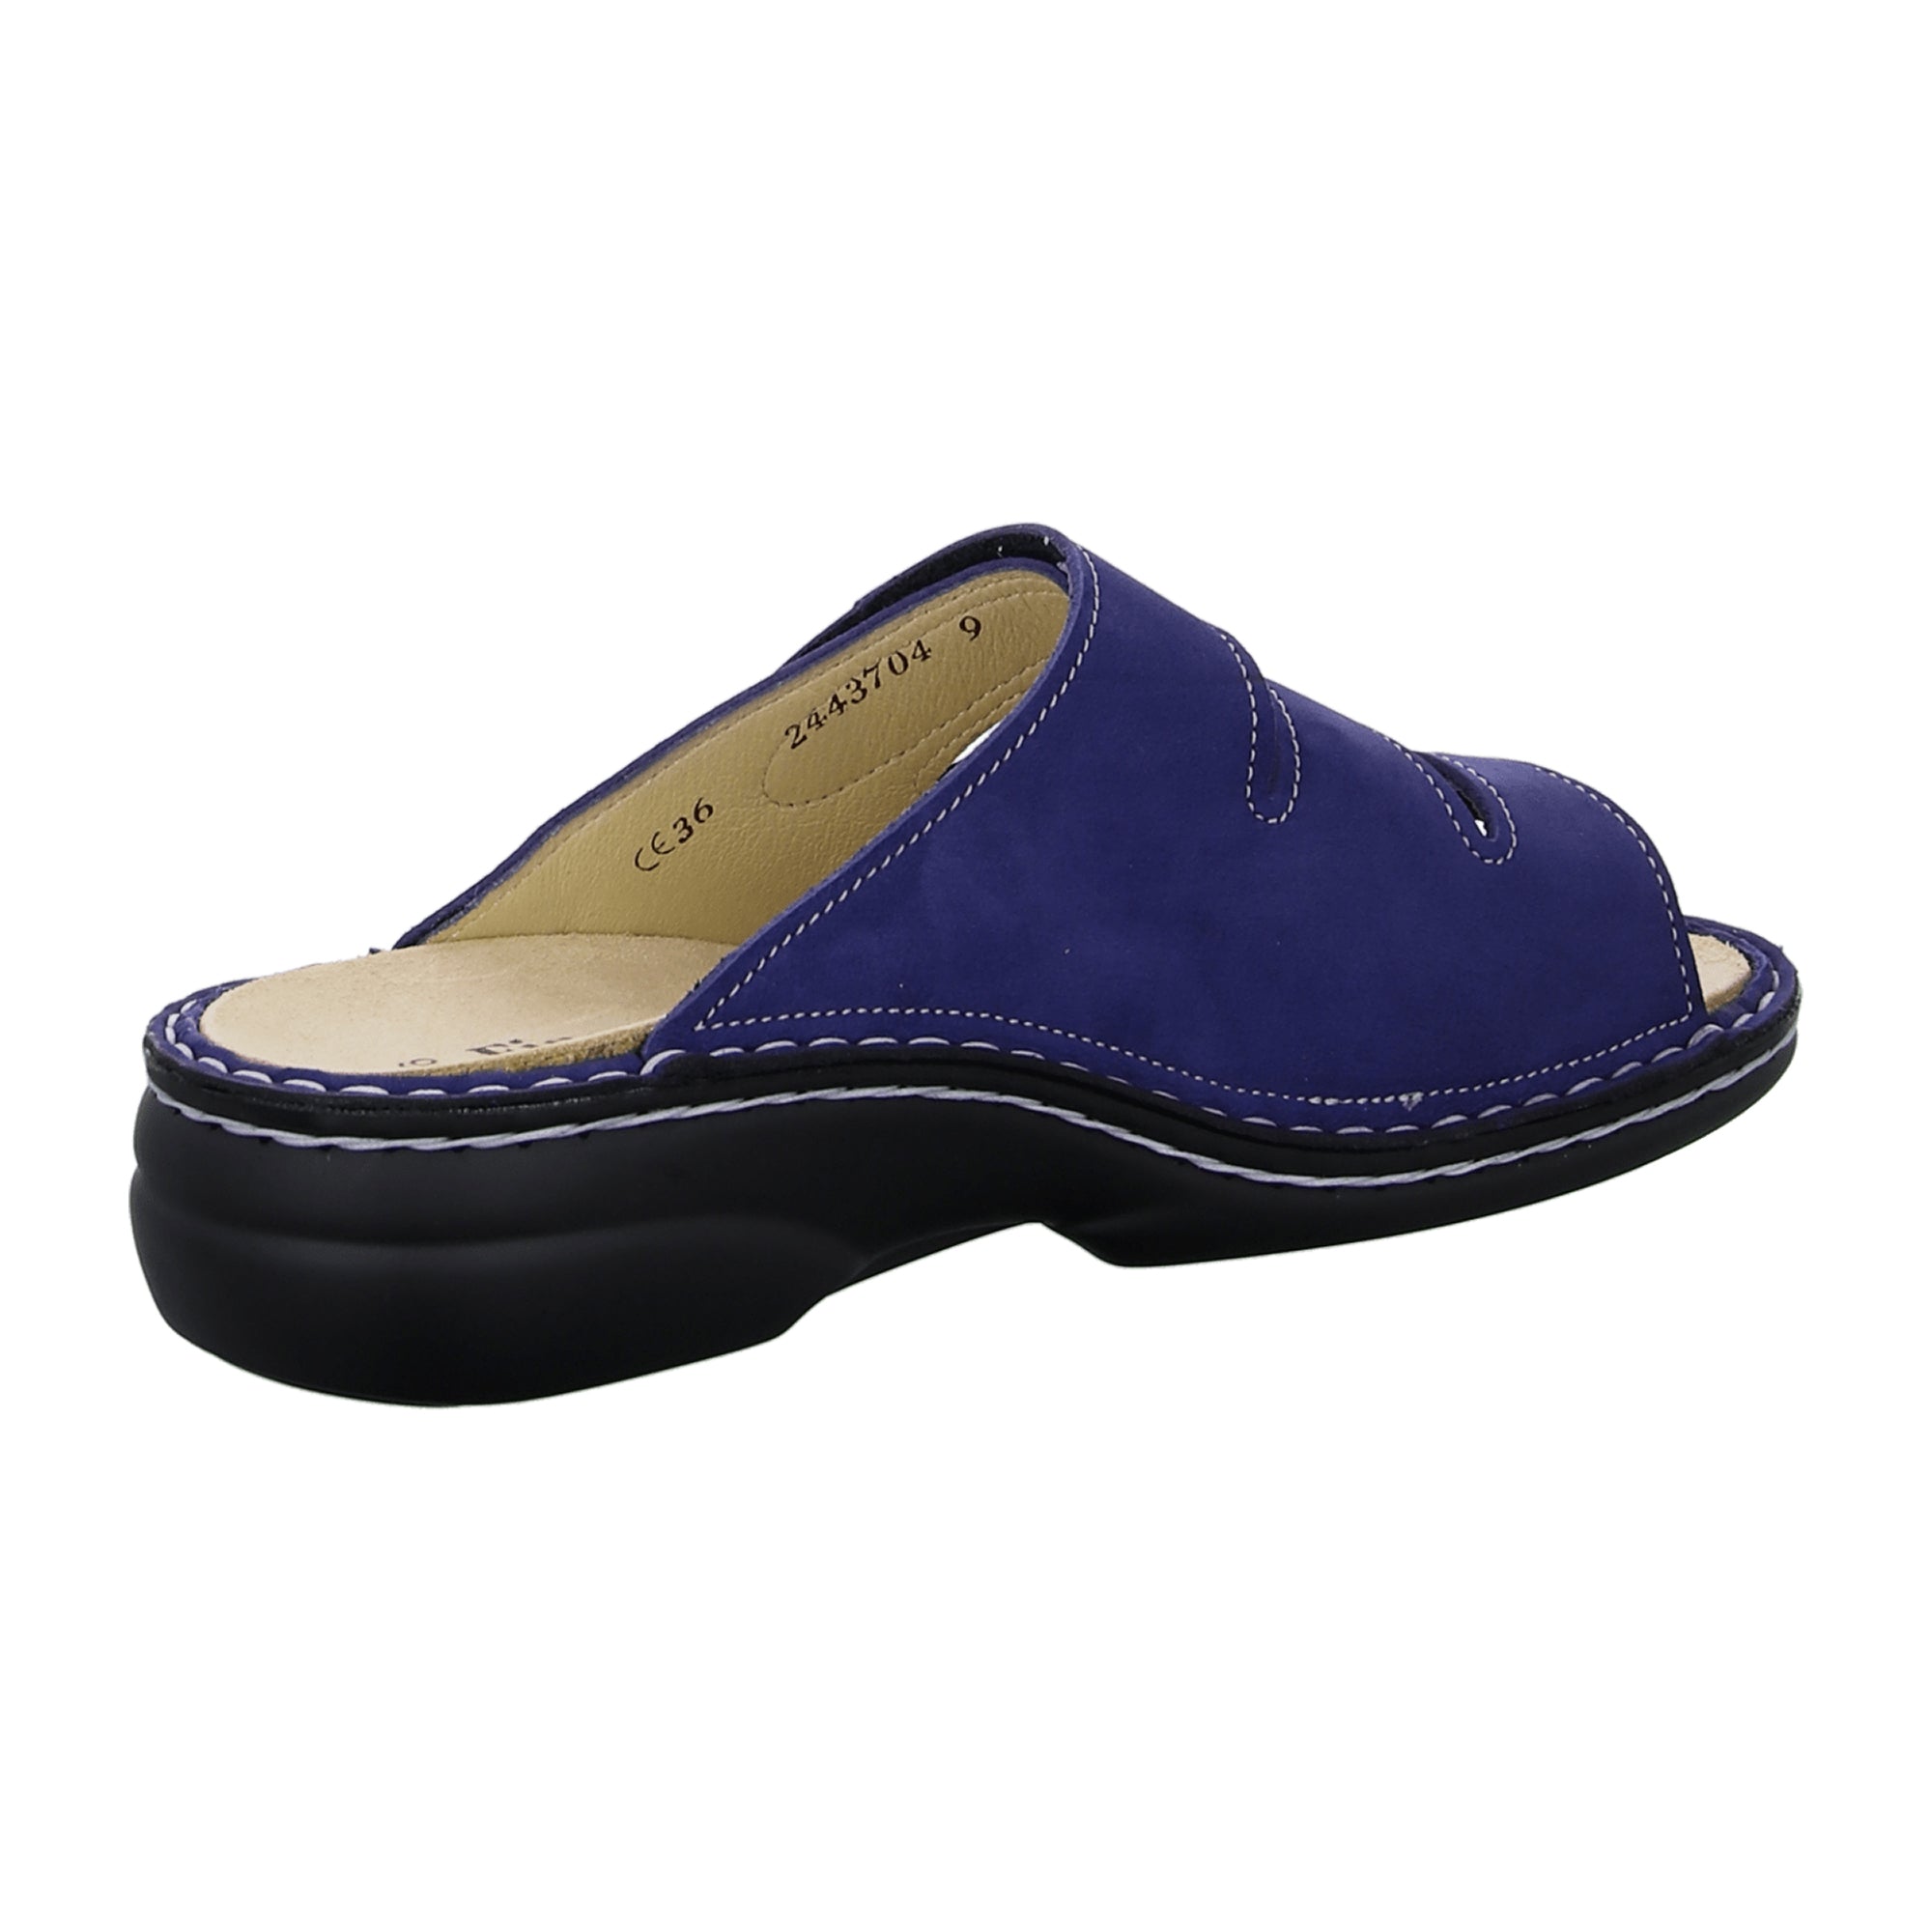 Finn Comfort Kos Women's Slide Sandals in Royal/Atlantic Blue - Stylish & Comfortable Leather Footwear